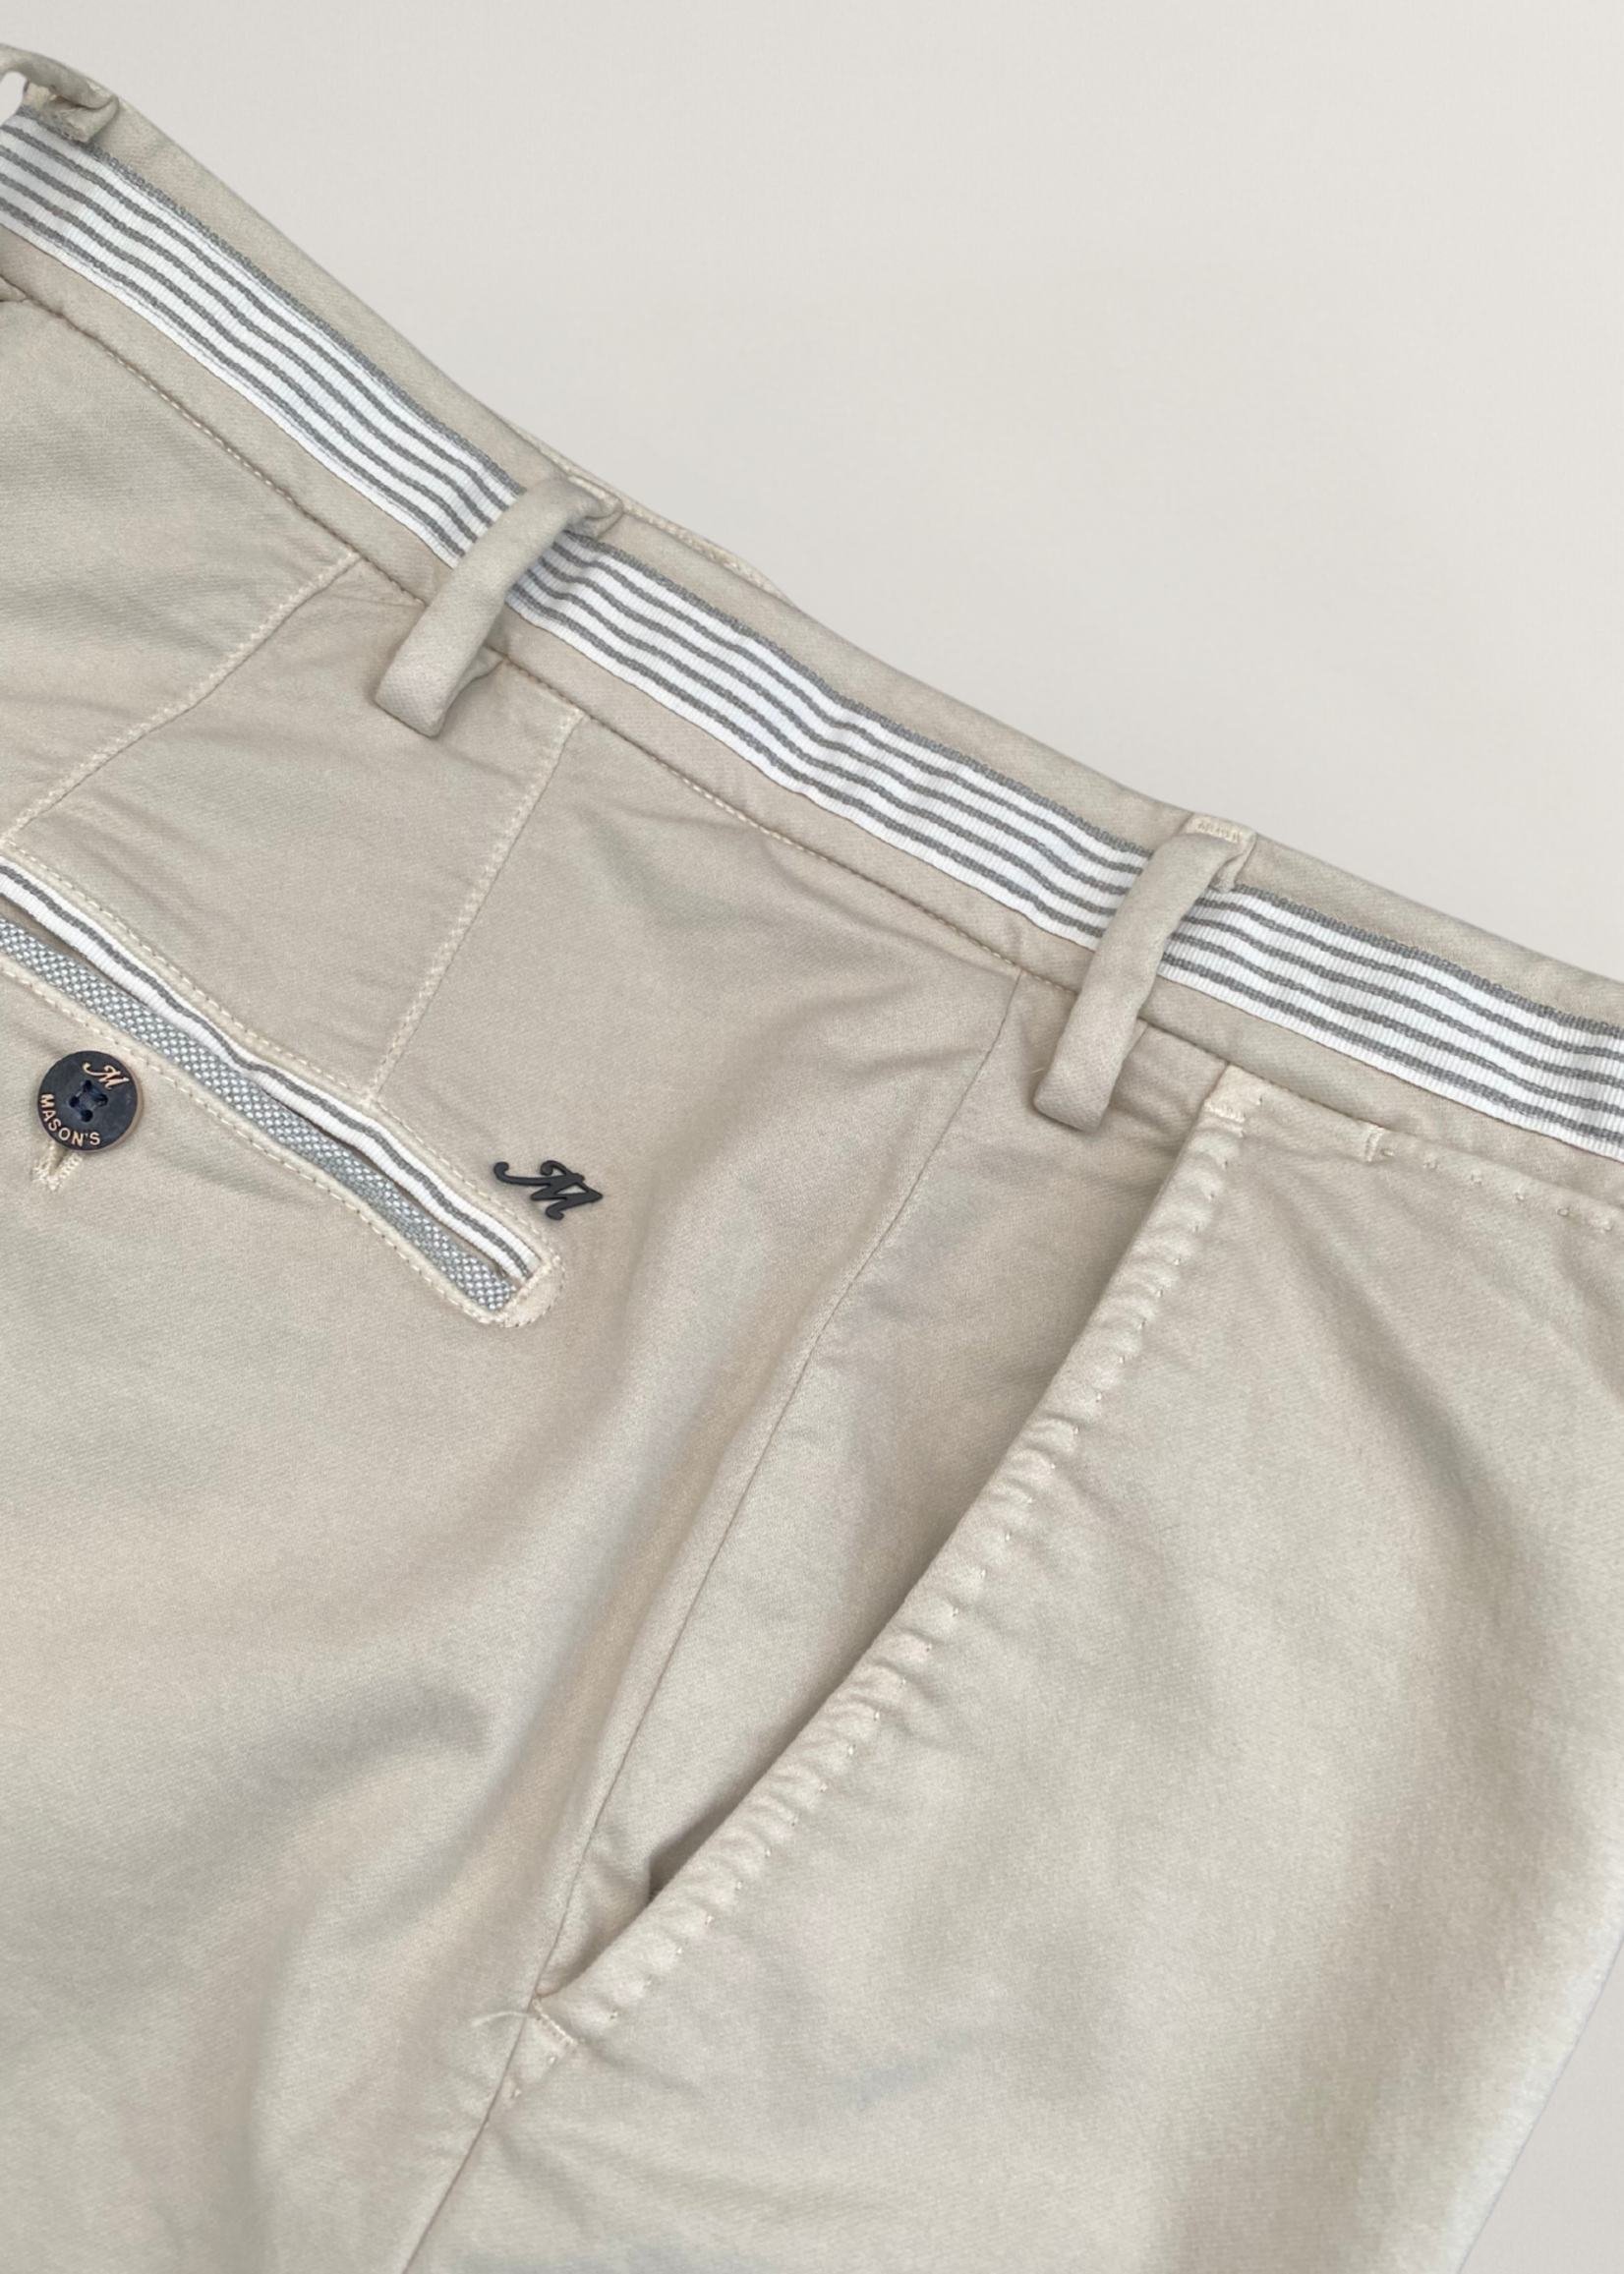 MASON'S Torino Golf pantalon chino jogger homme en jersey stretch slim - Beige